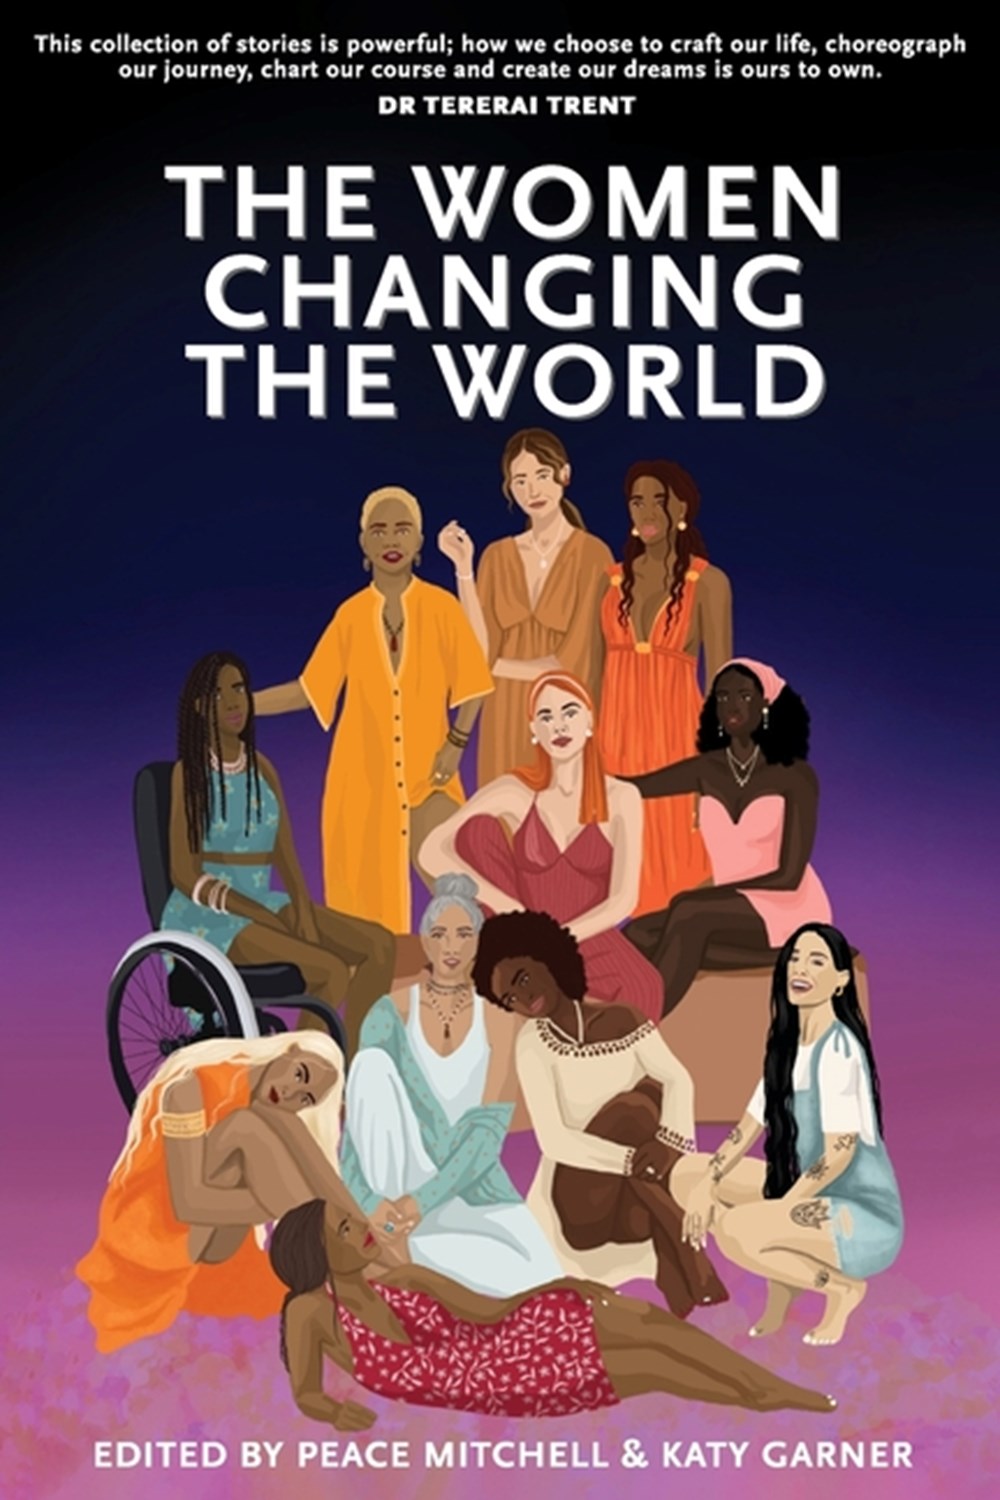 Women Changing the World